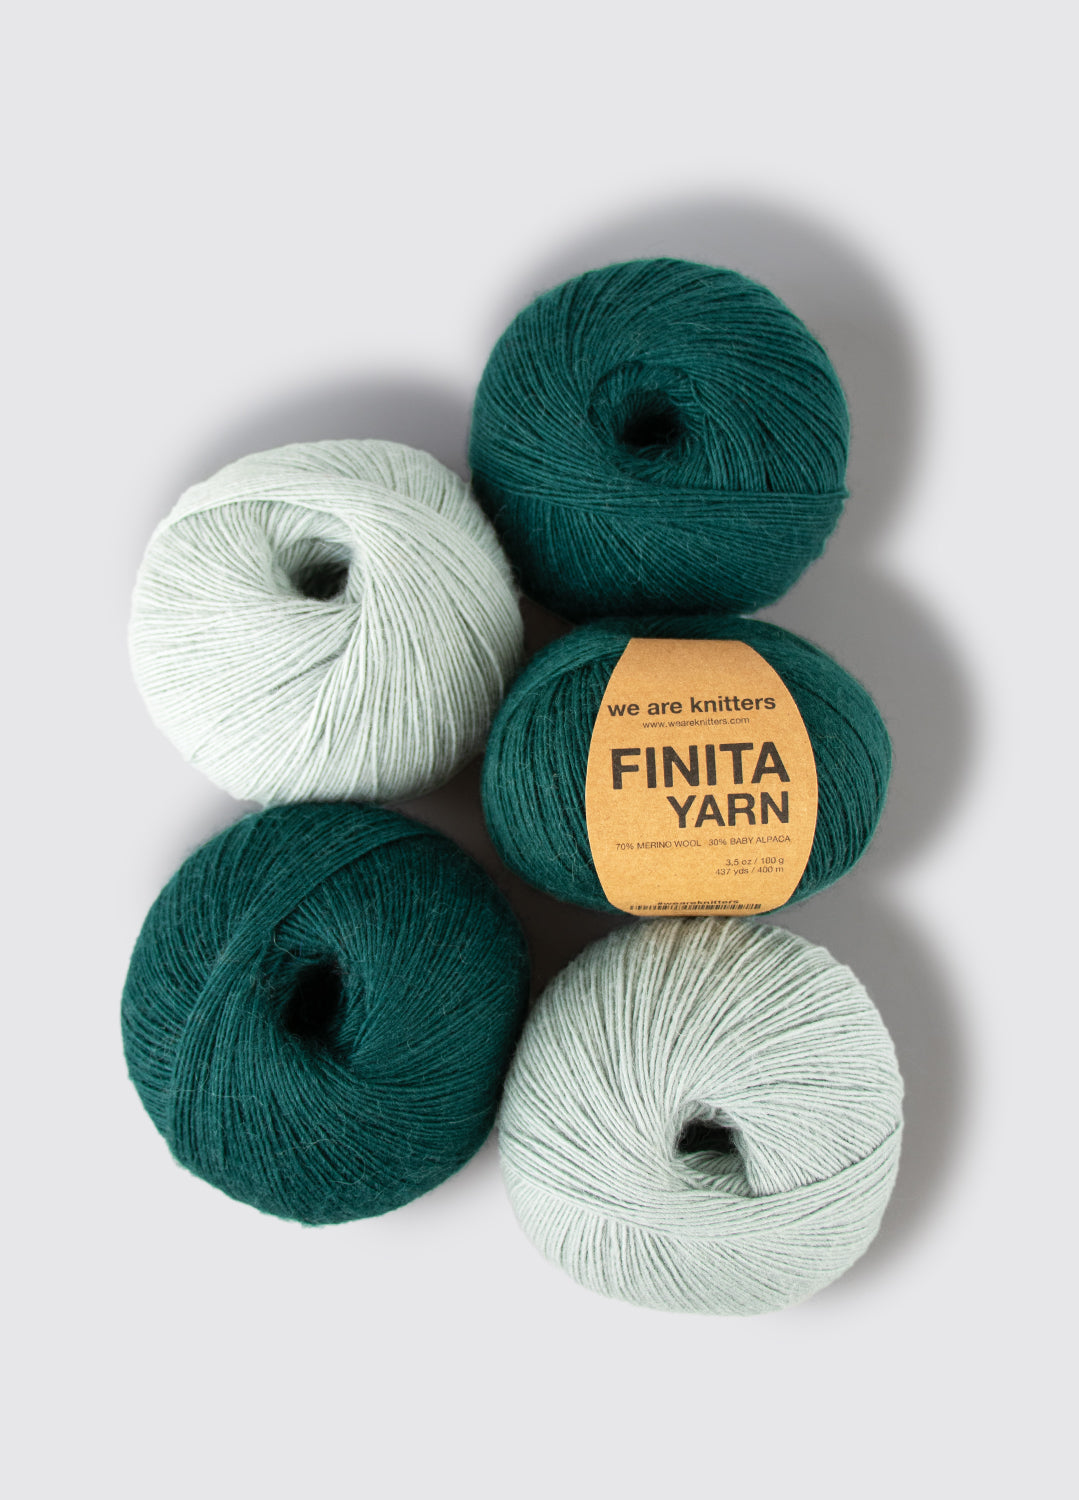 5 Pack of Finita Yarn Balls